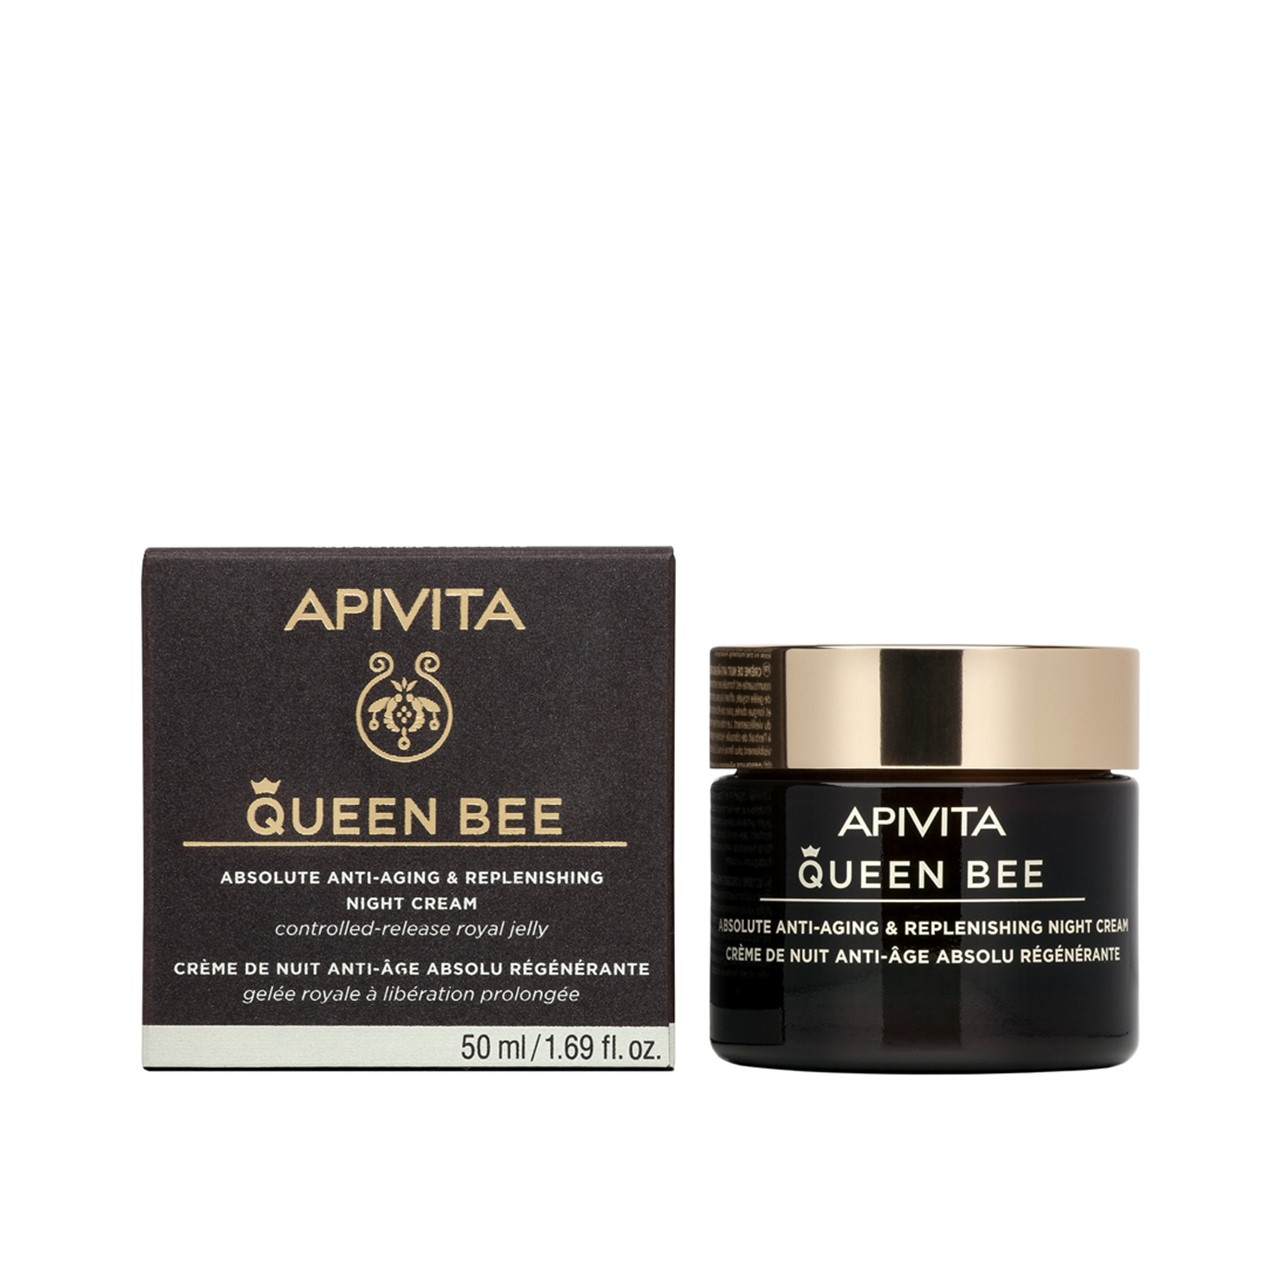 APIVITA Queen Bee Absolute Anti-Aging & Replenishing Night Cream 50ml (1.69fl oz)